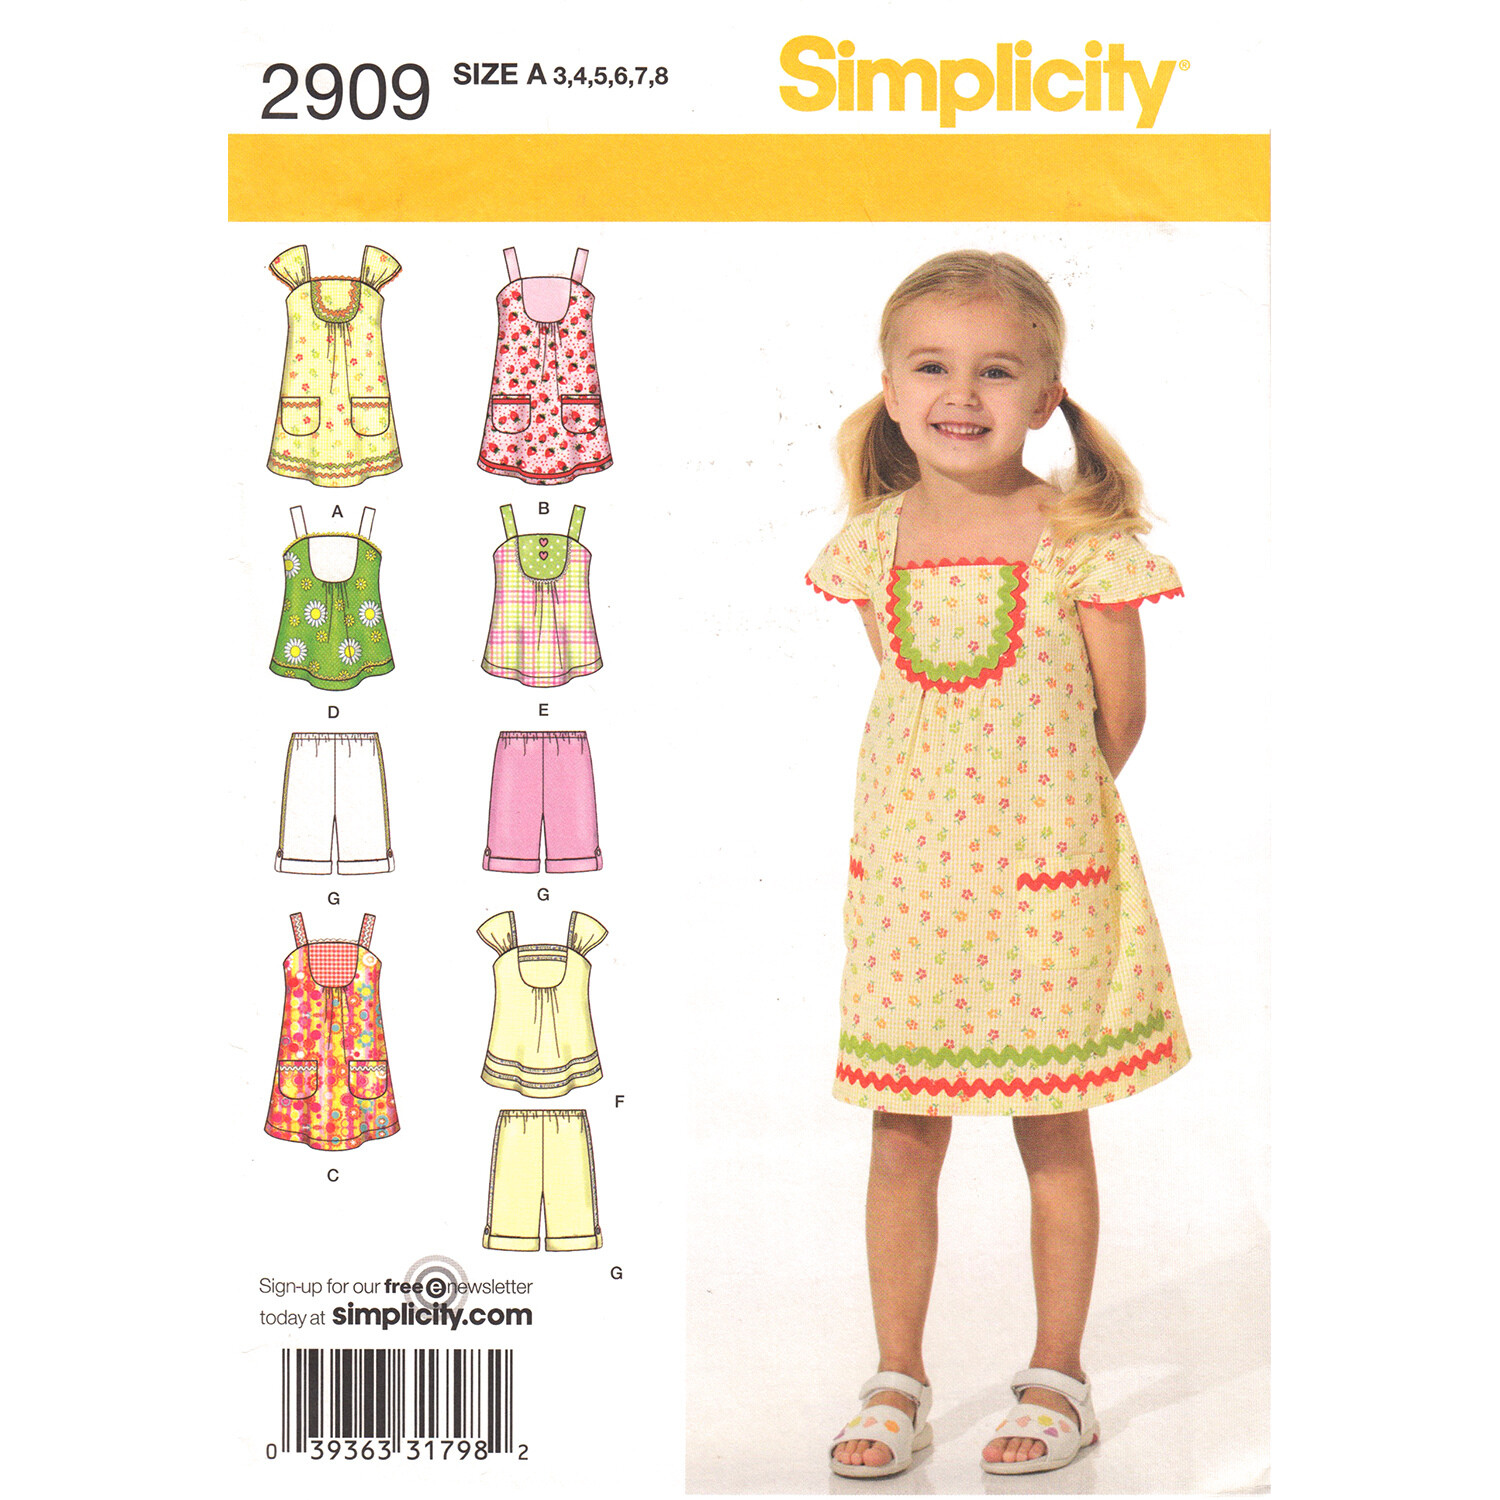 Simplicity 2909 girls pattern